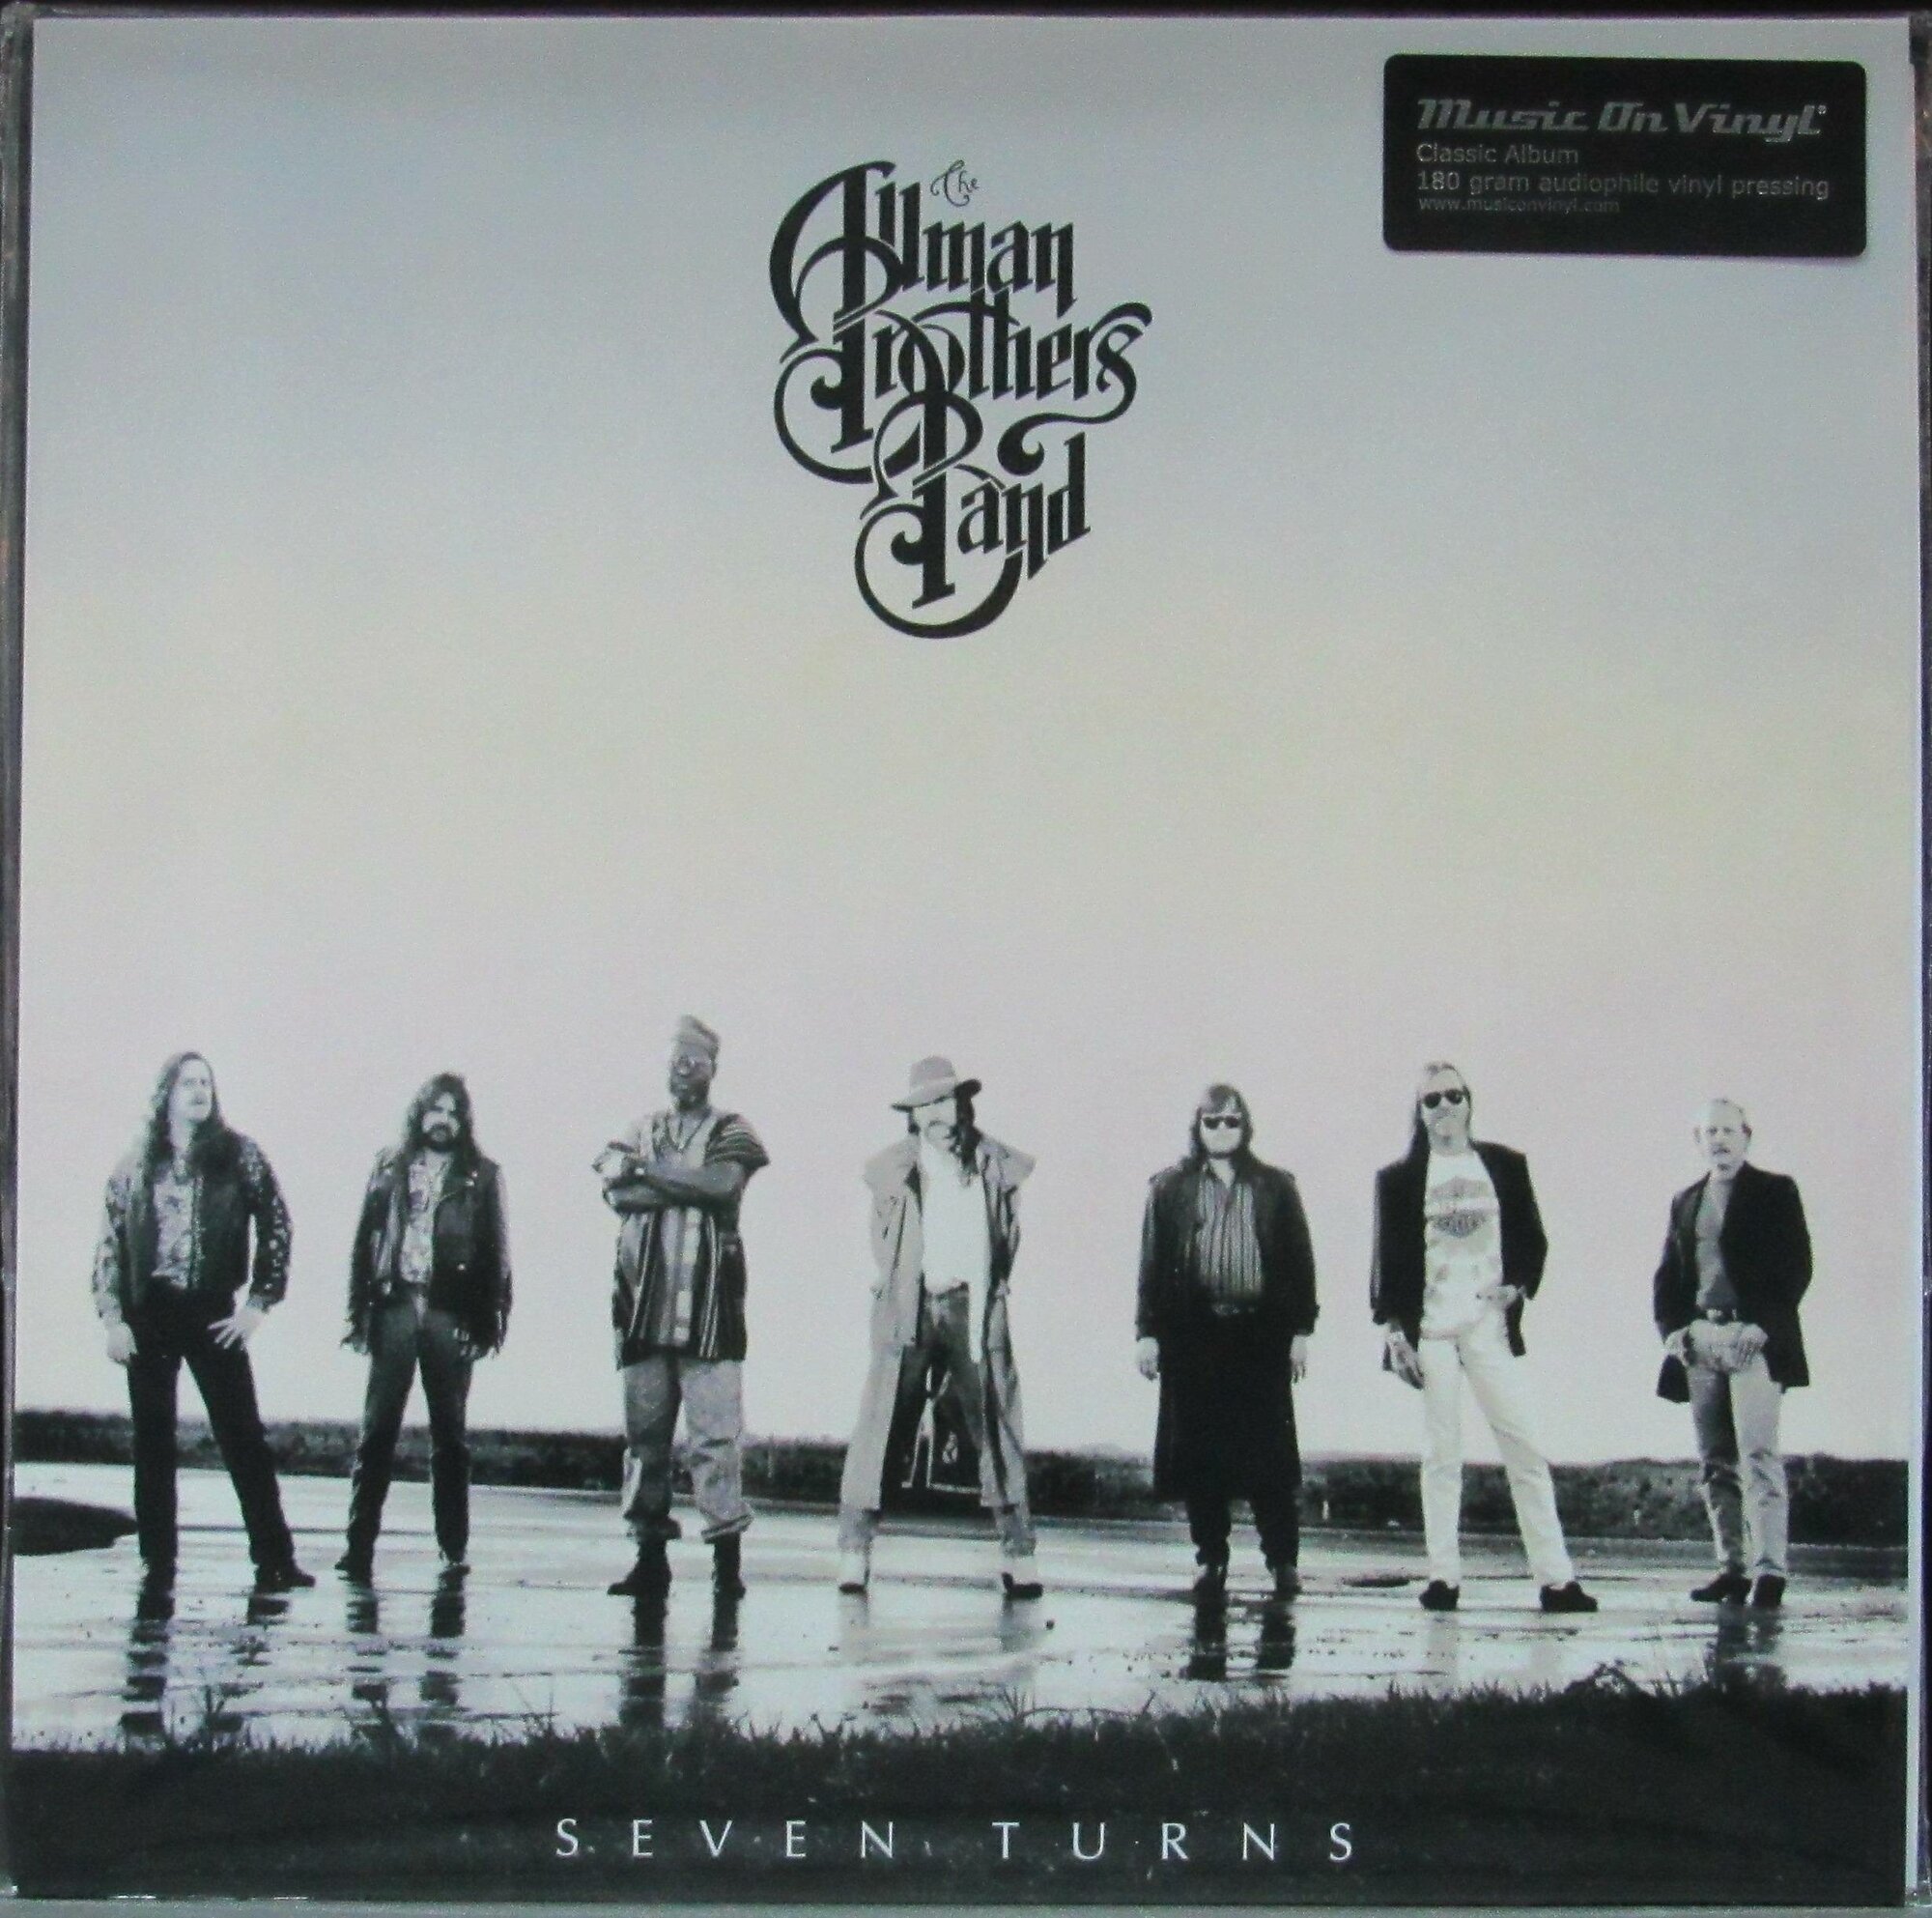 Allman Brothers Band "Виниловая пластинка Allman Brothers Band Seven Turns"